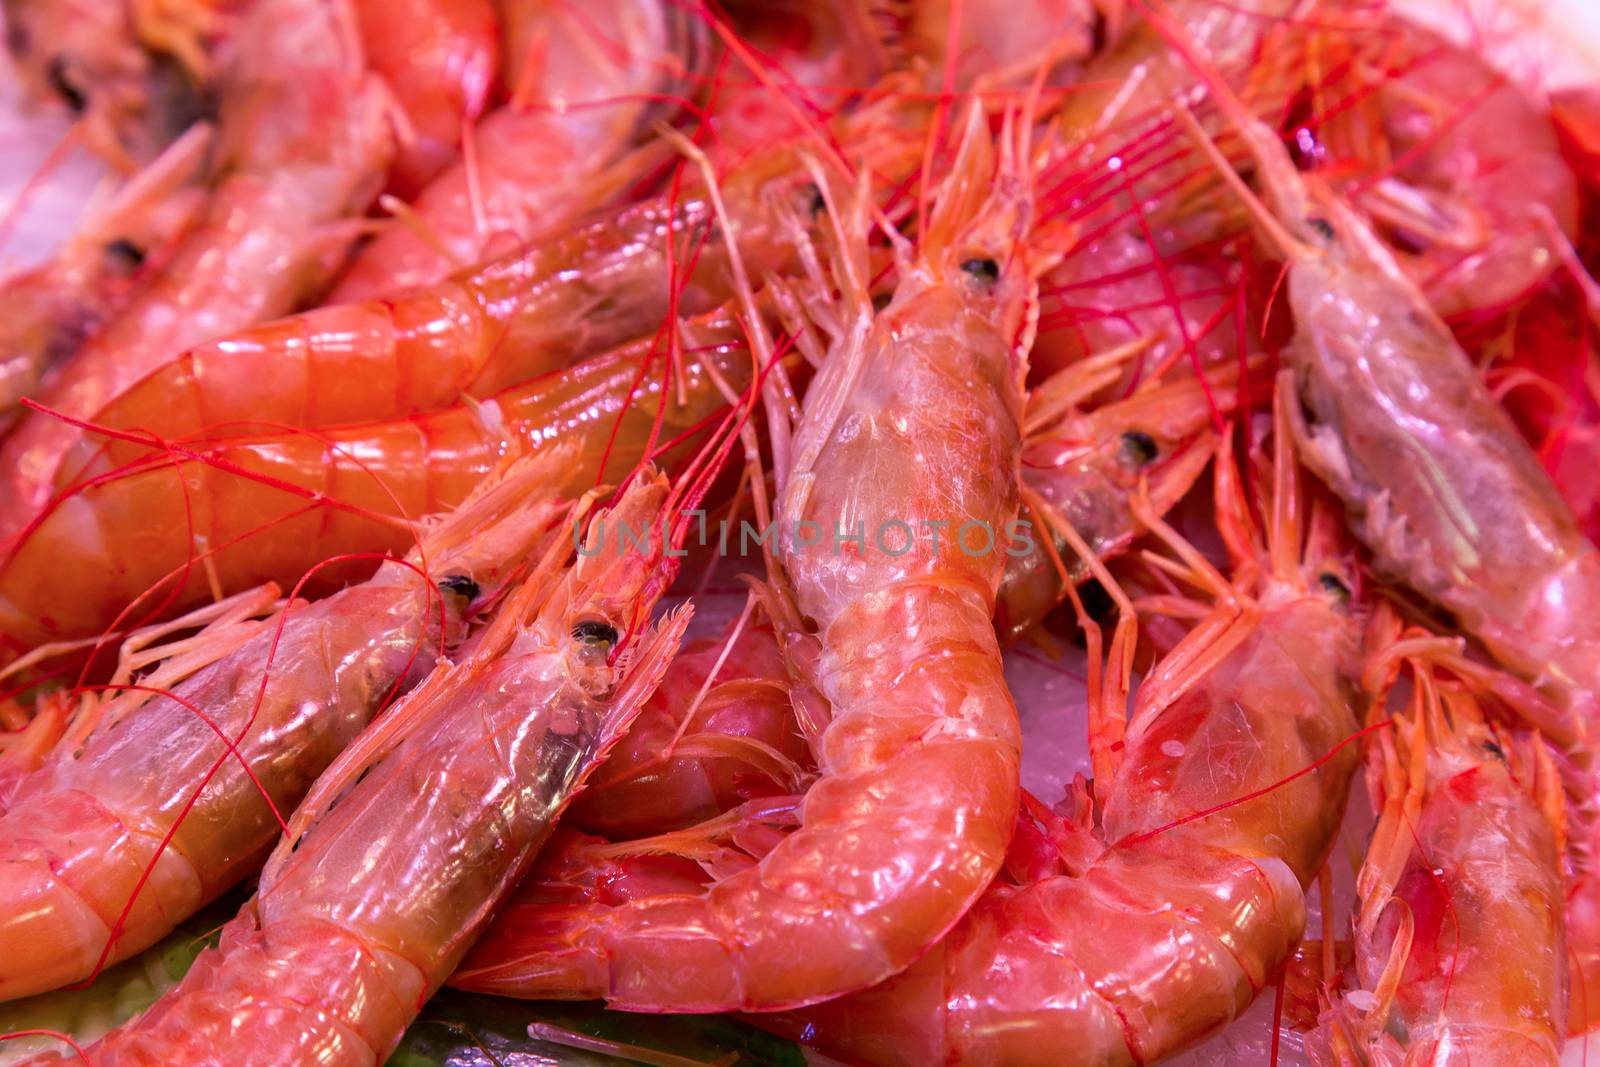 Fresh shrimps in market. La boqueria Barcelona of Spain